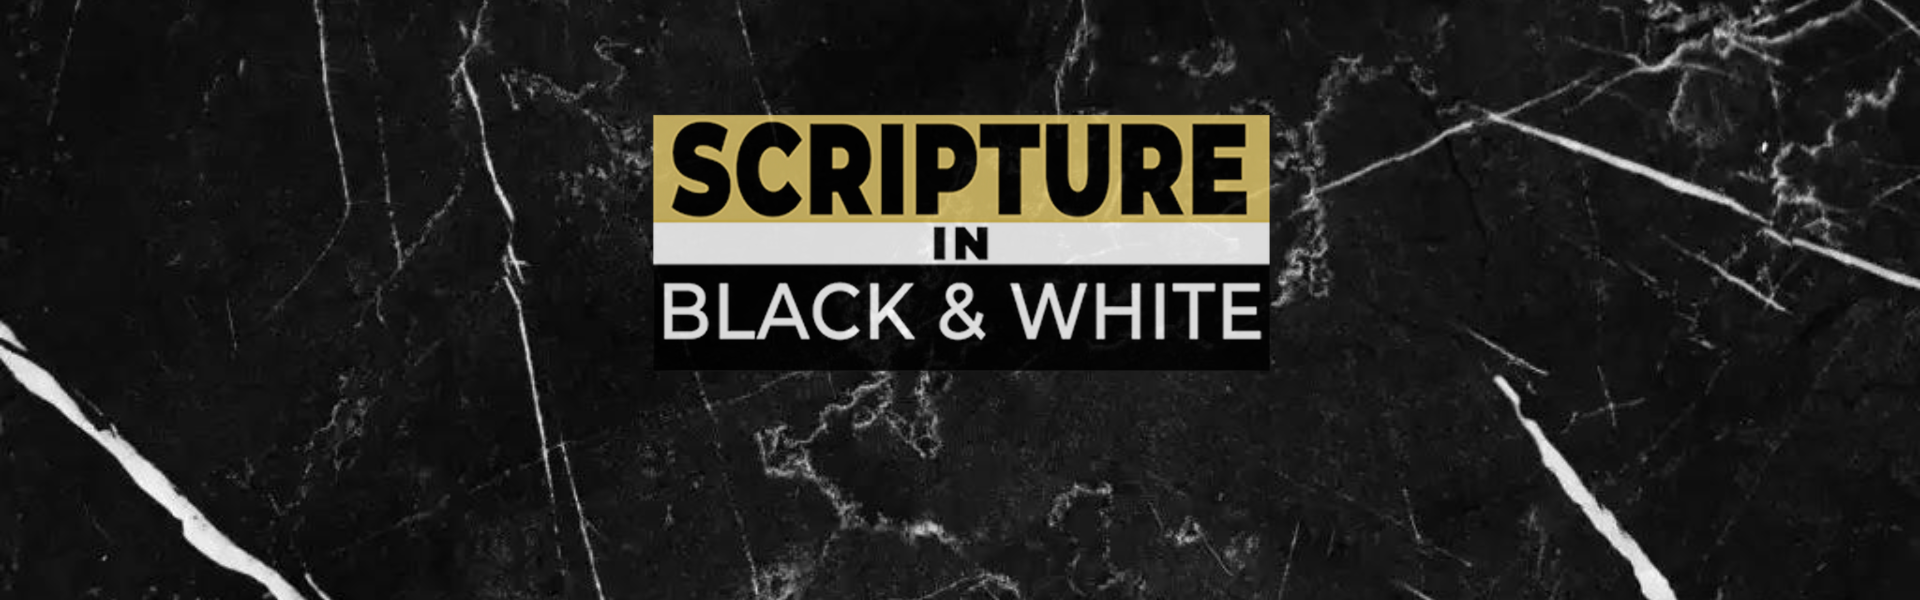 Scripture in Black and White